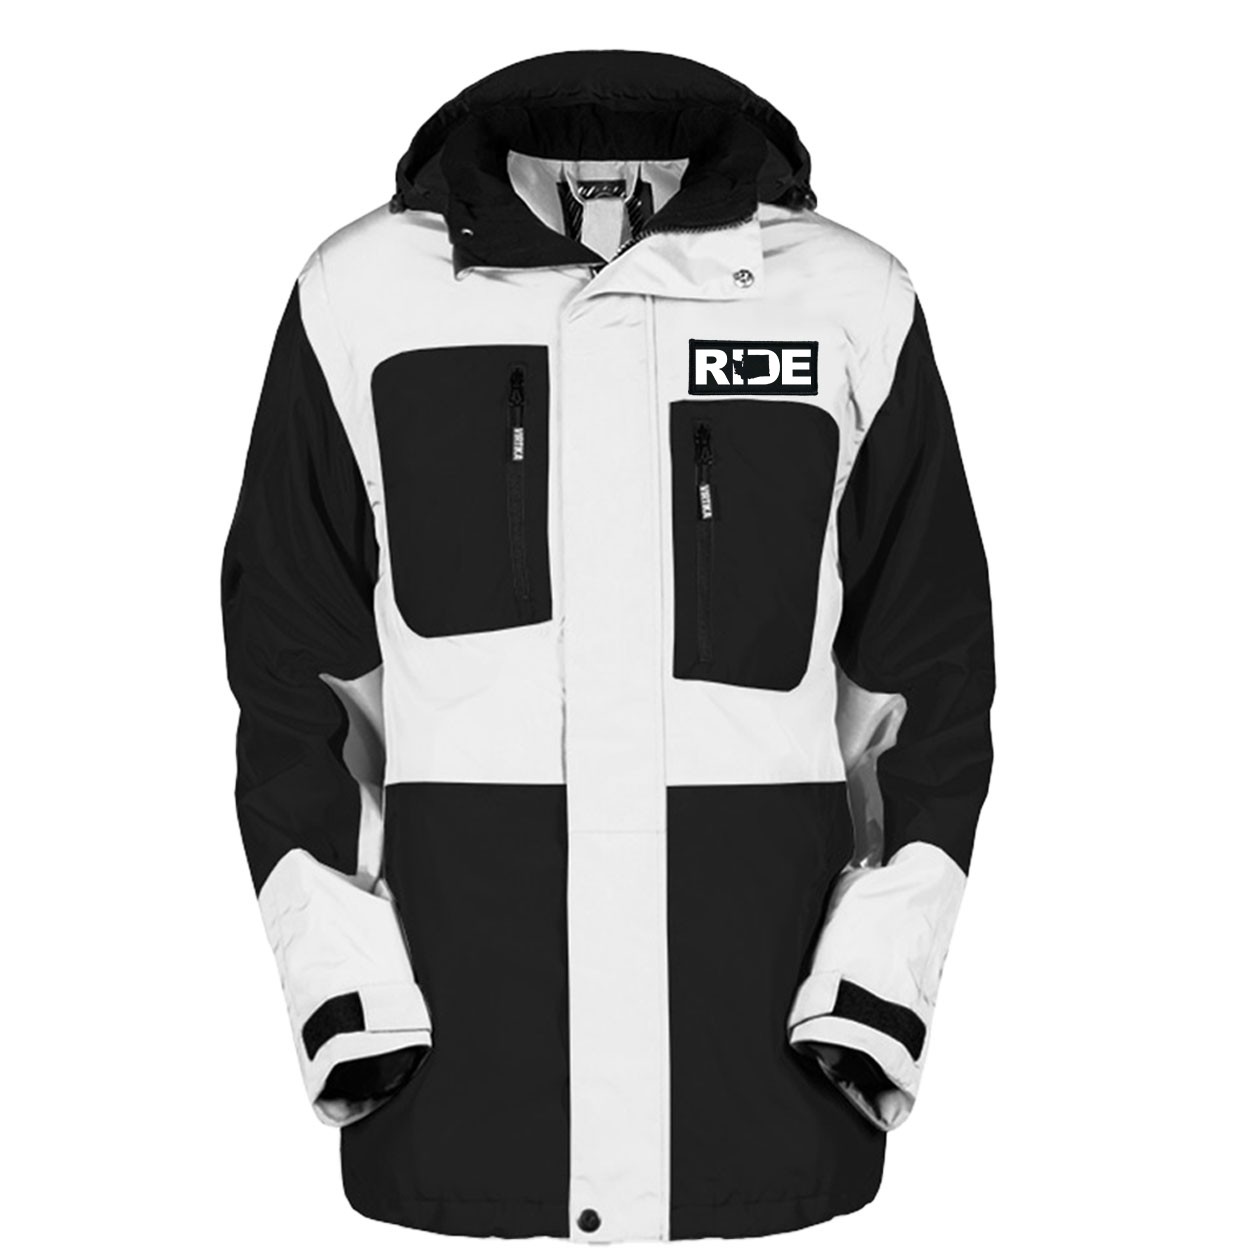 Ride Washington Pro Waterproof Breathable Winter Virtika Jacket Black/White (White Logo)